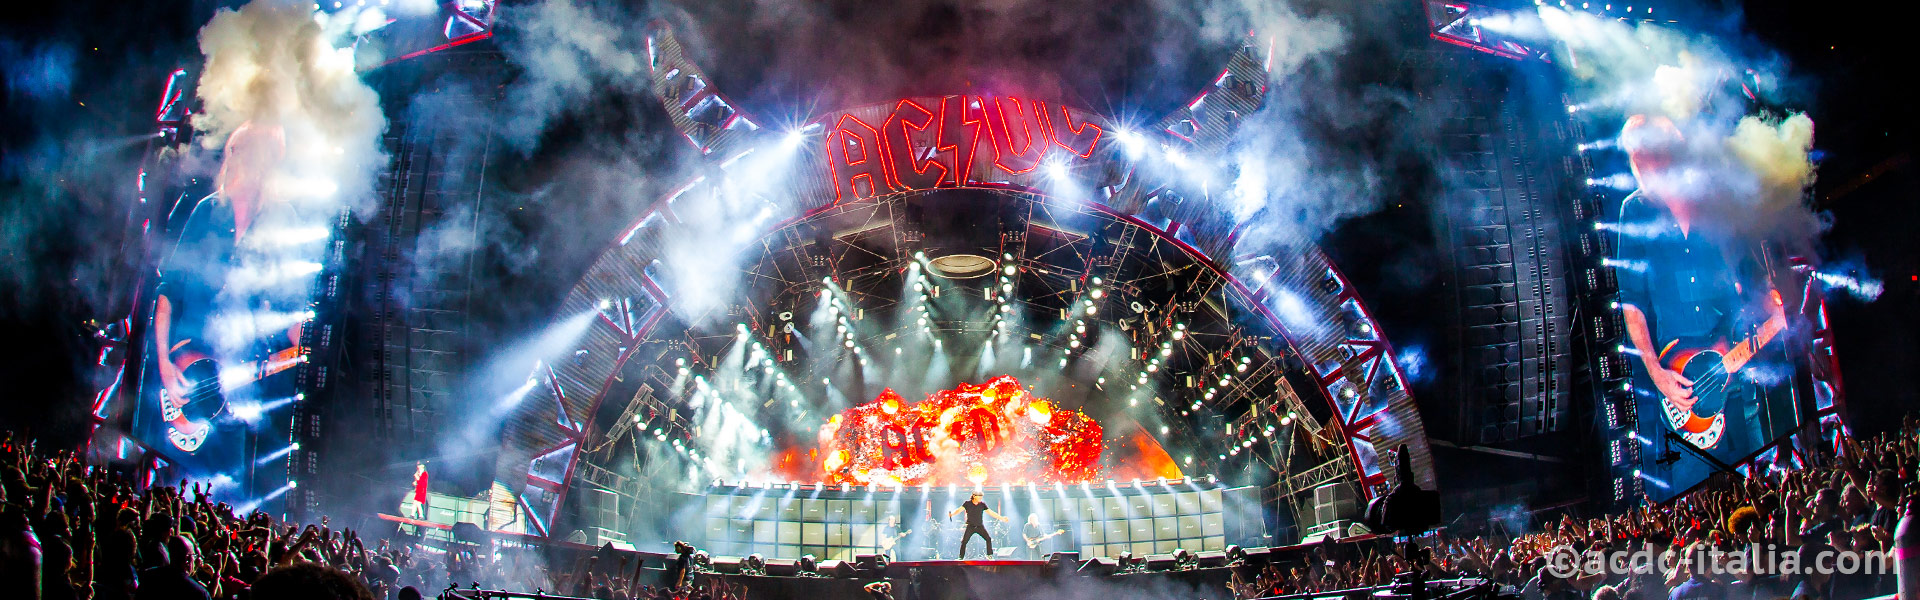 Concerti AC/DC nel 2016: annunciate le date in Europa